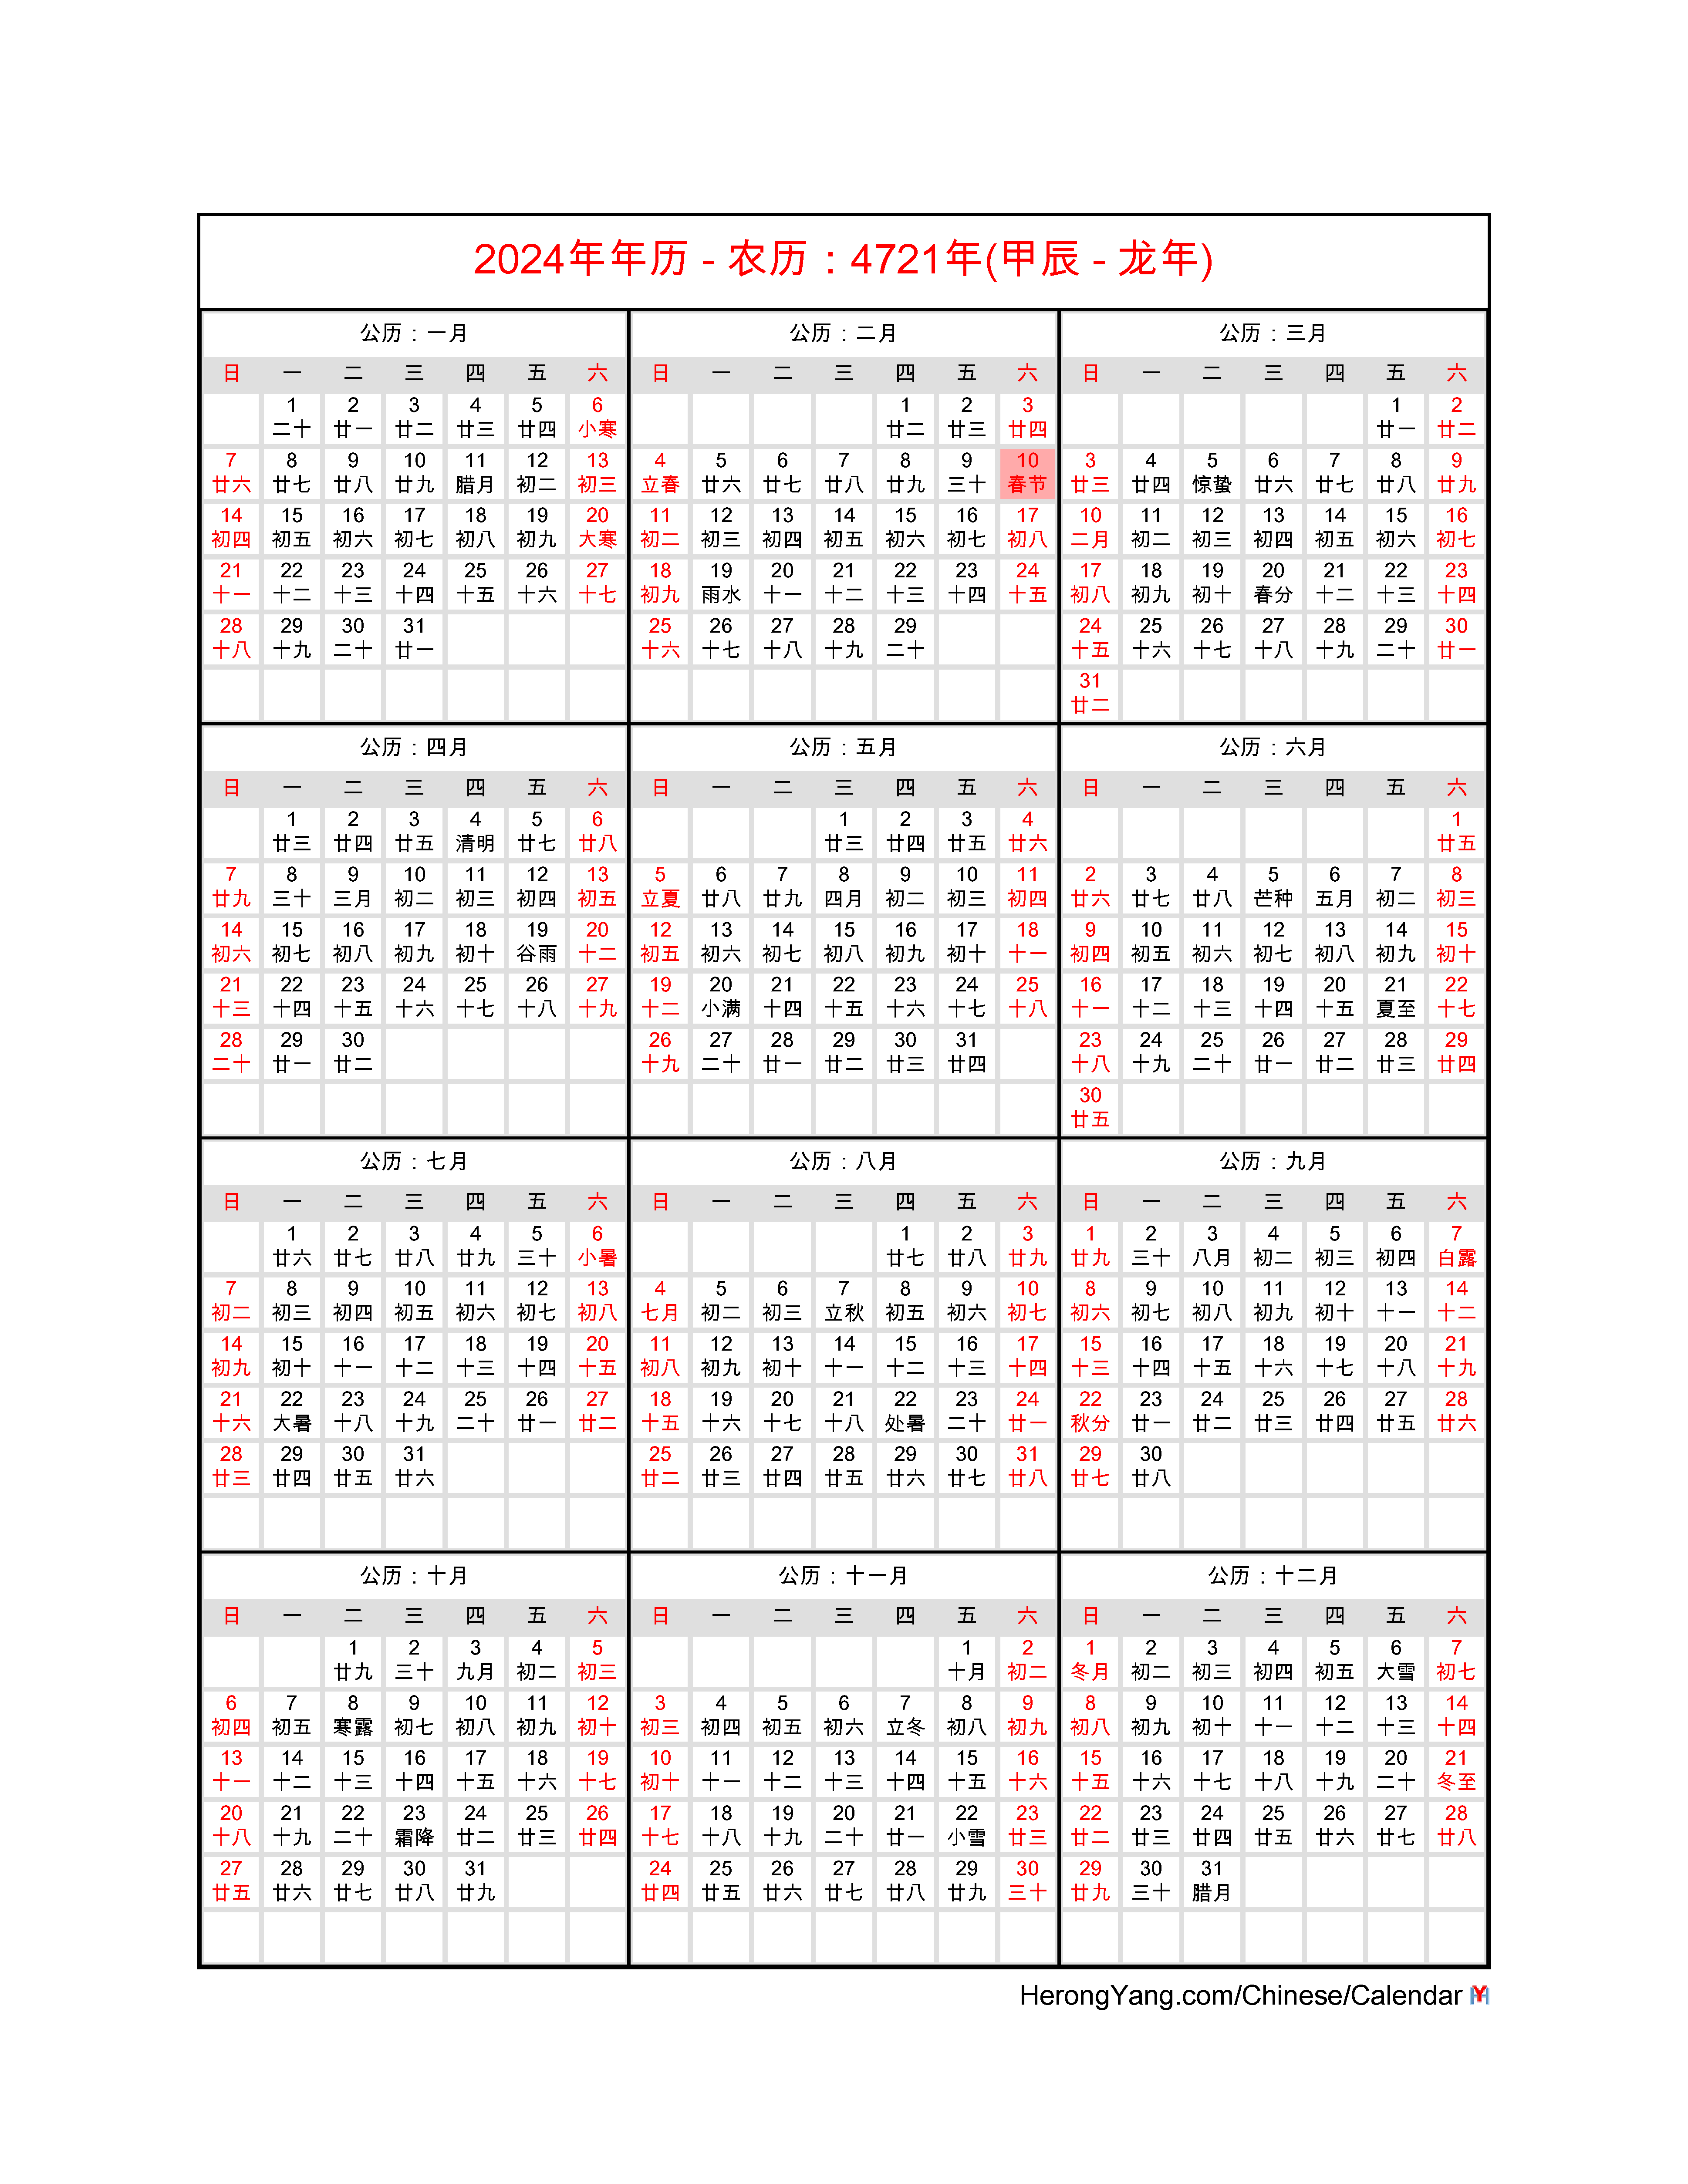 Lunar Calendar Los Angeles 2024 New Perfect Popular List of February